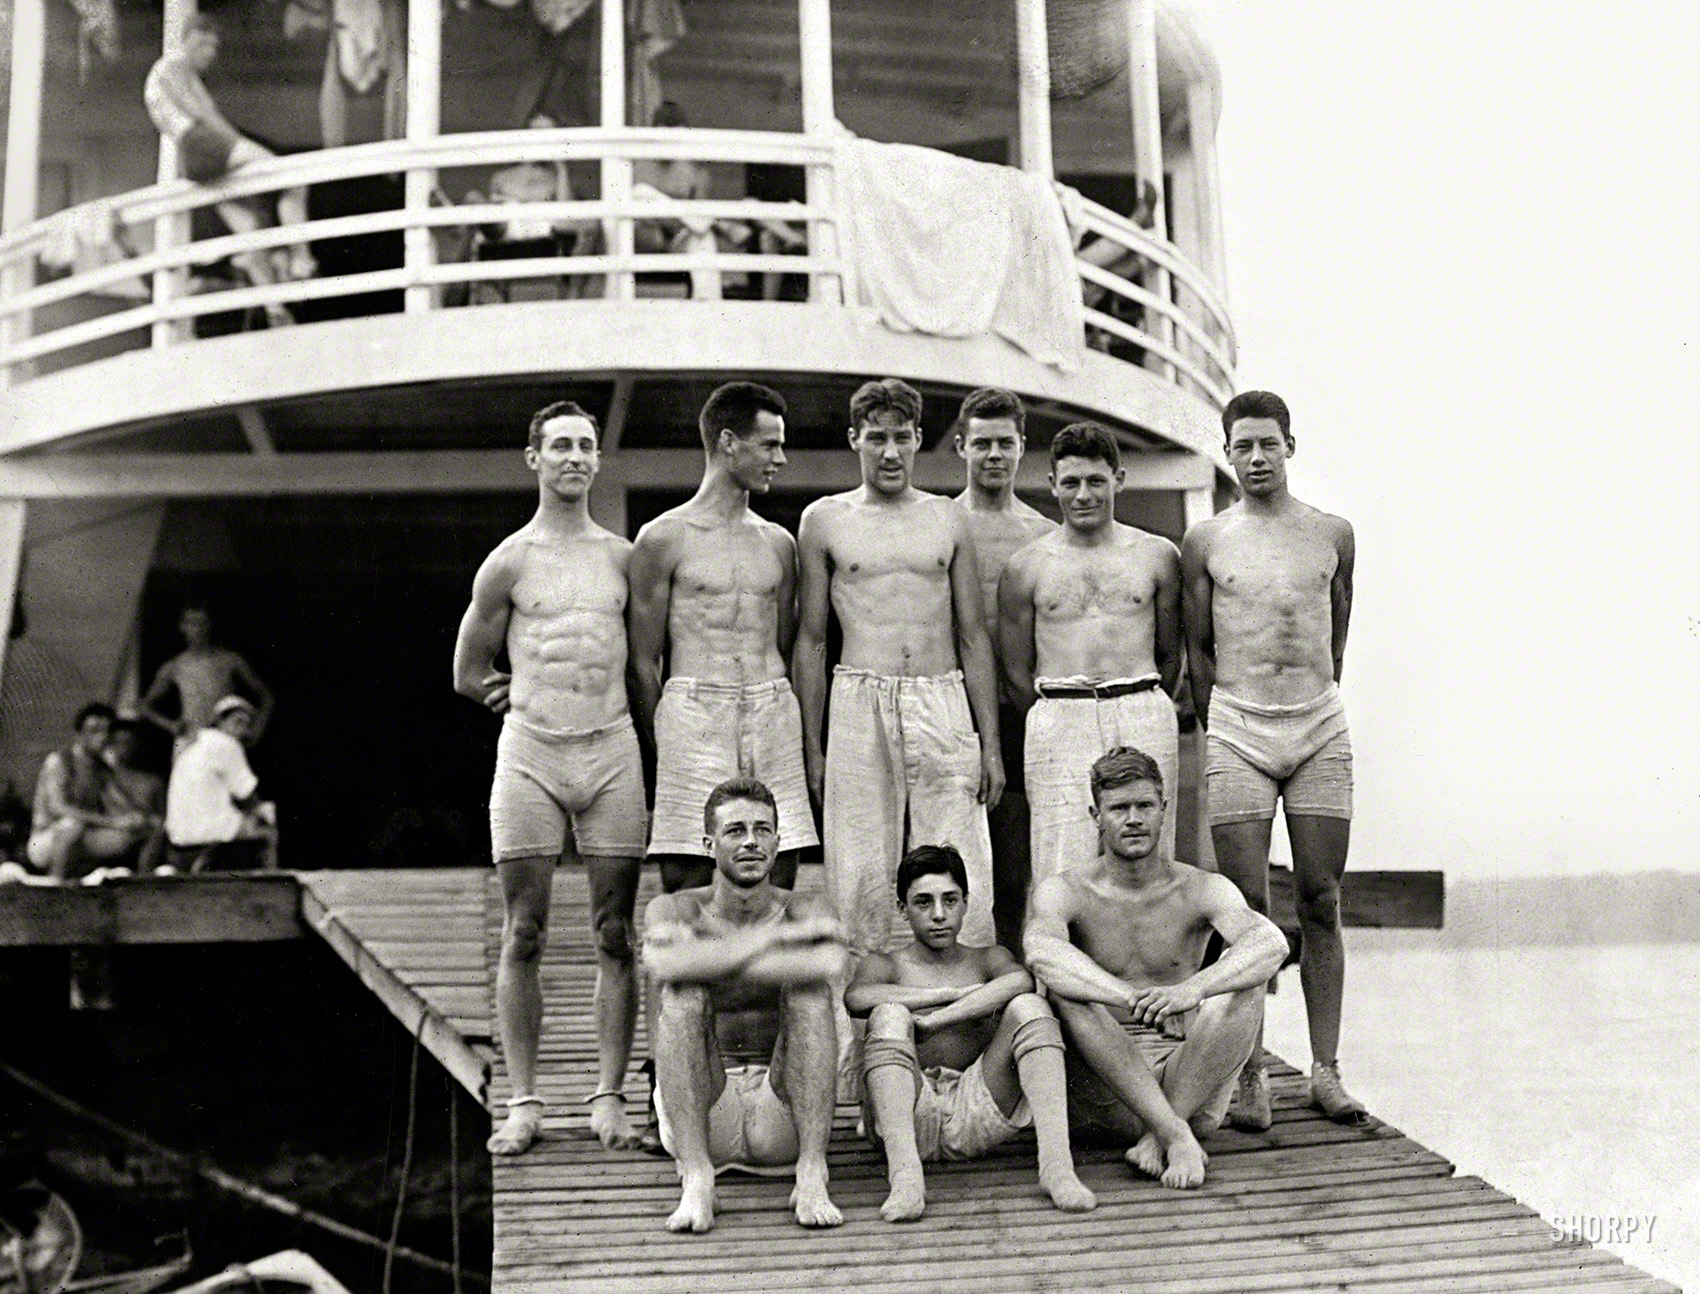 1910. "Columbia crew at Poughkeepsie boathouse -- Members of the Columbia University varsity eight-oared crew team. Top row: R.K. Murphy, F. Miller, Paul Renshaw, A.M. Hamman, W. Steinschneider, G. Downing; bottom row: S. Pitt, A. Brock, and F.H. Saunders at Poughkeepsie, New York, for an intercollegiate regatta." Gelatin silver print. Bain News Service. View full size.